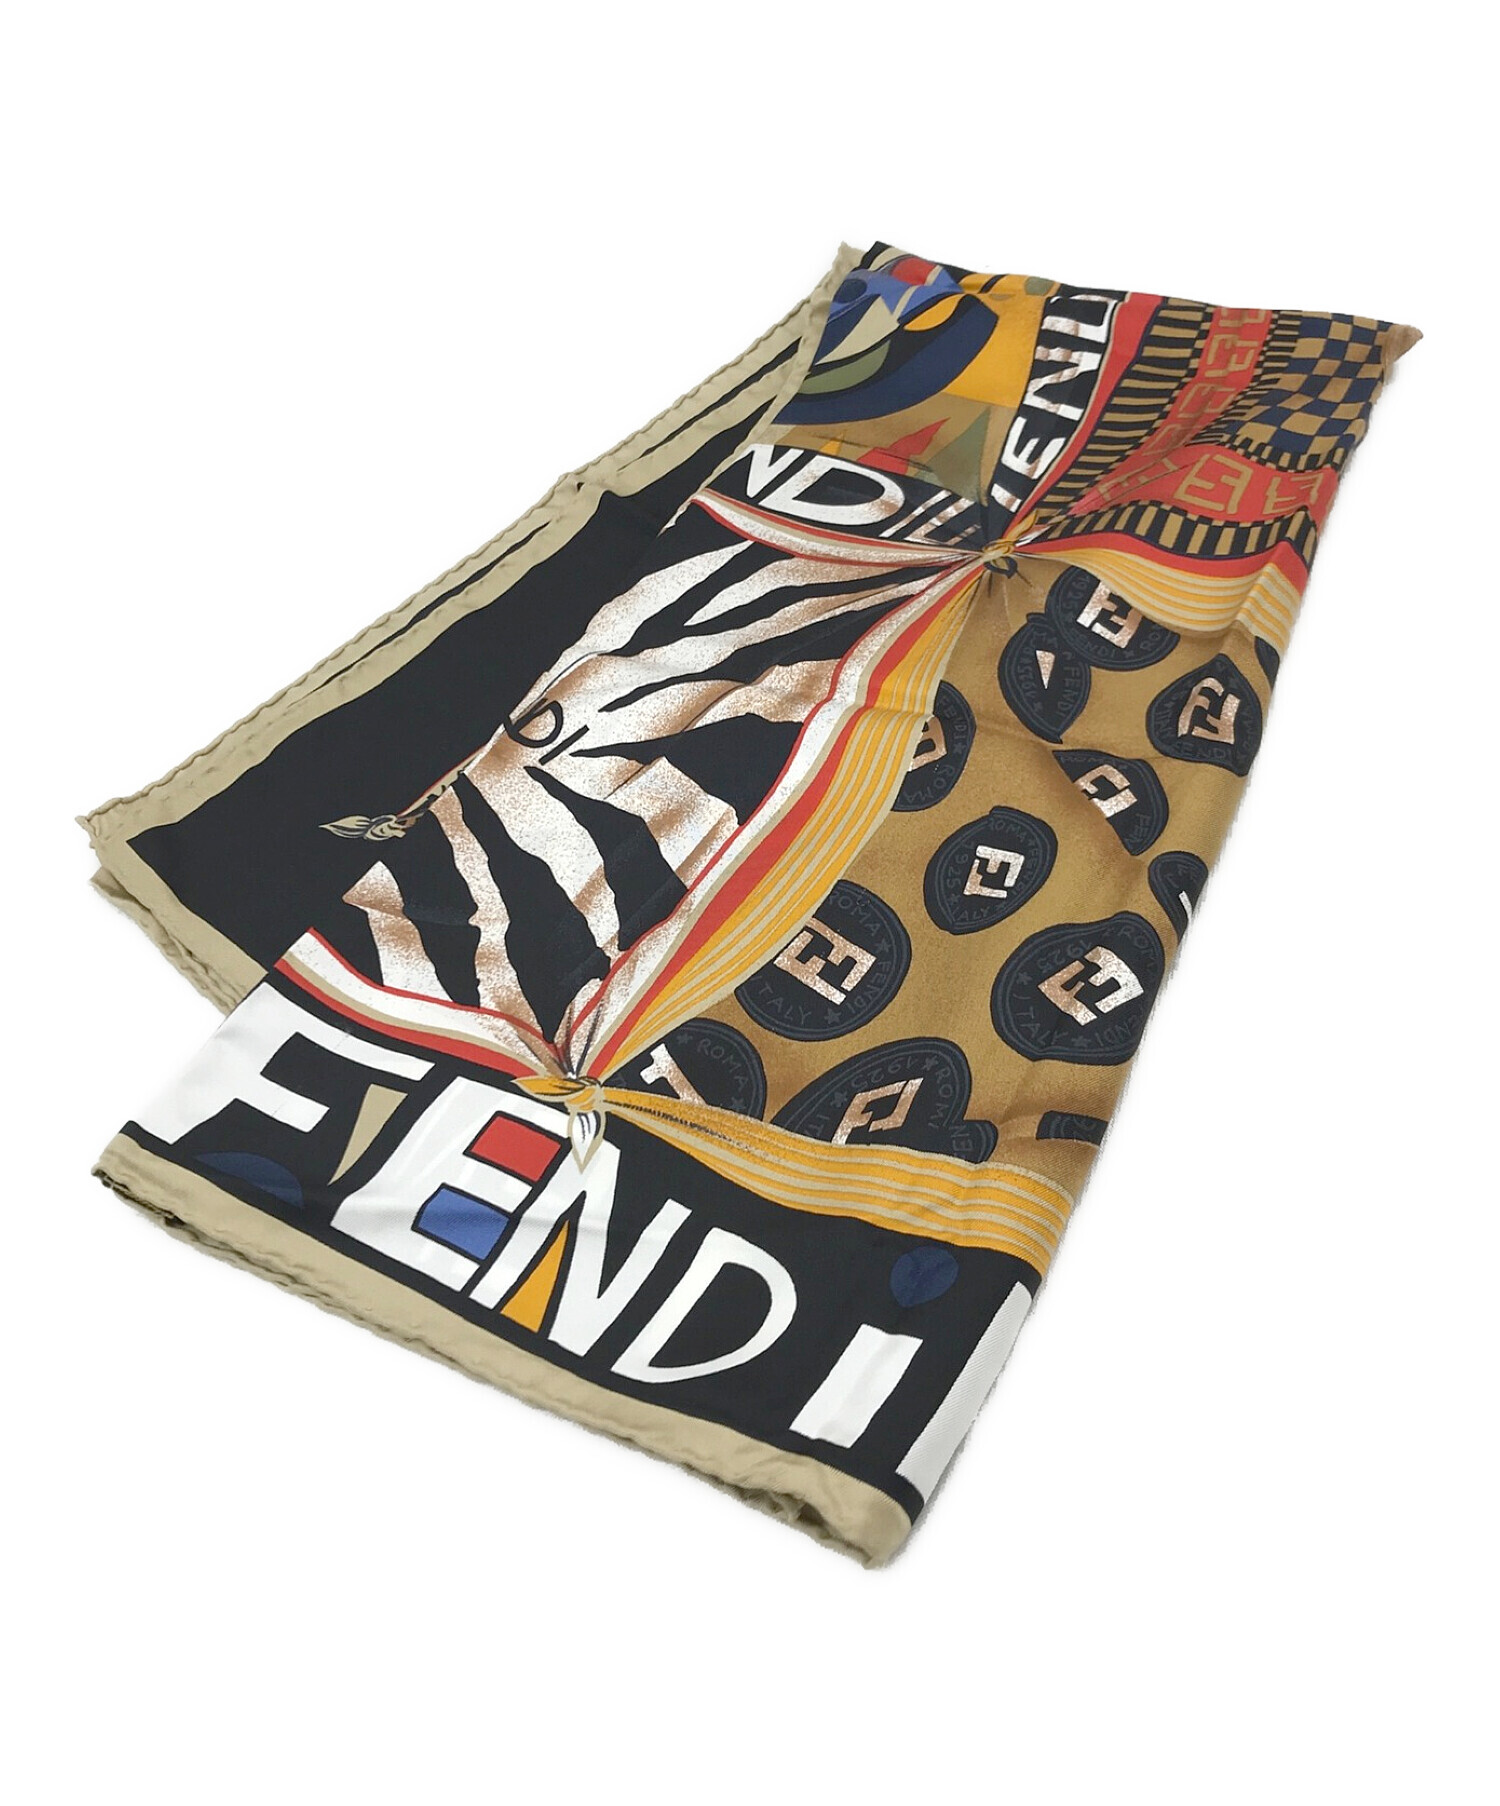 FENDI/フェンディ/ シルクスカーフファッション小物 - バンダナ/スカーフ